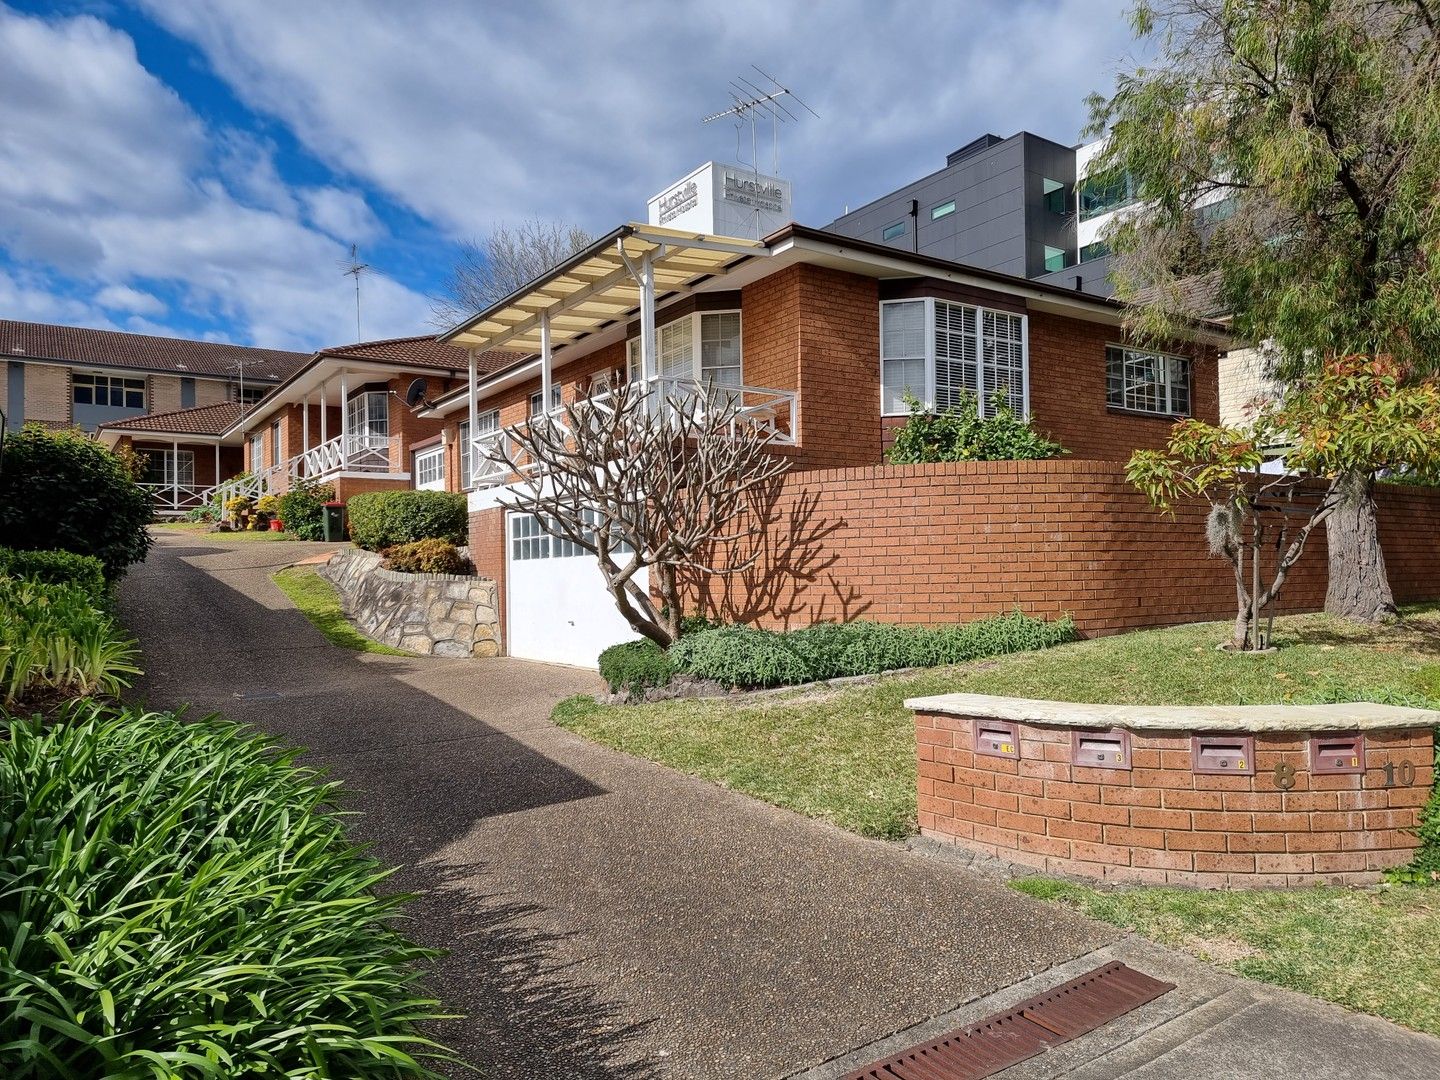 3 bedrooms Villa in 2/8-10 Millett St HURSTVILLE NSW, 2220